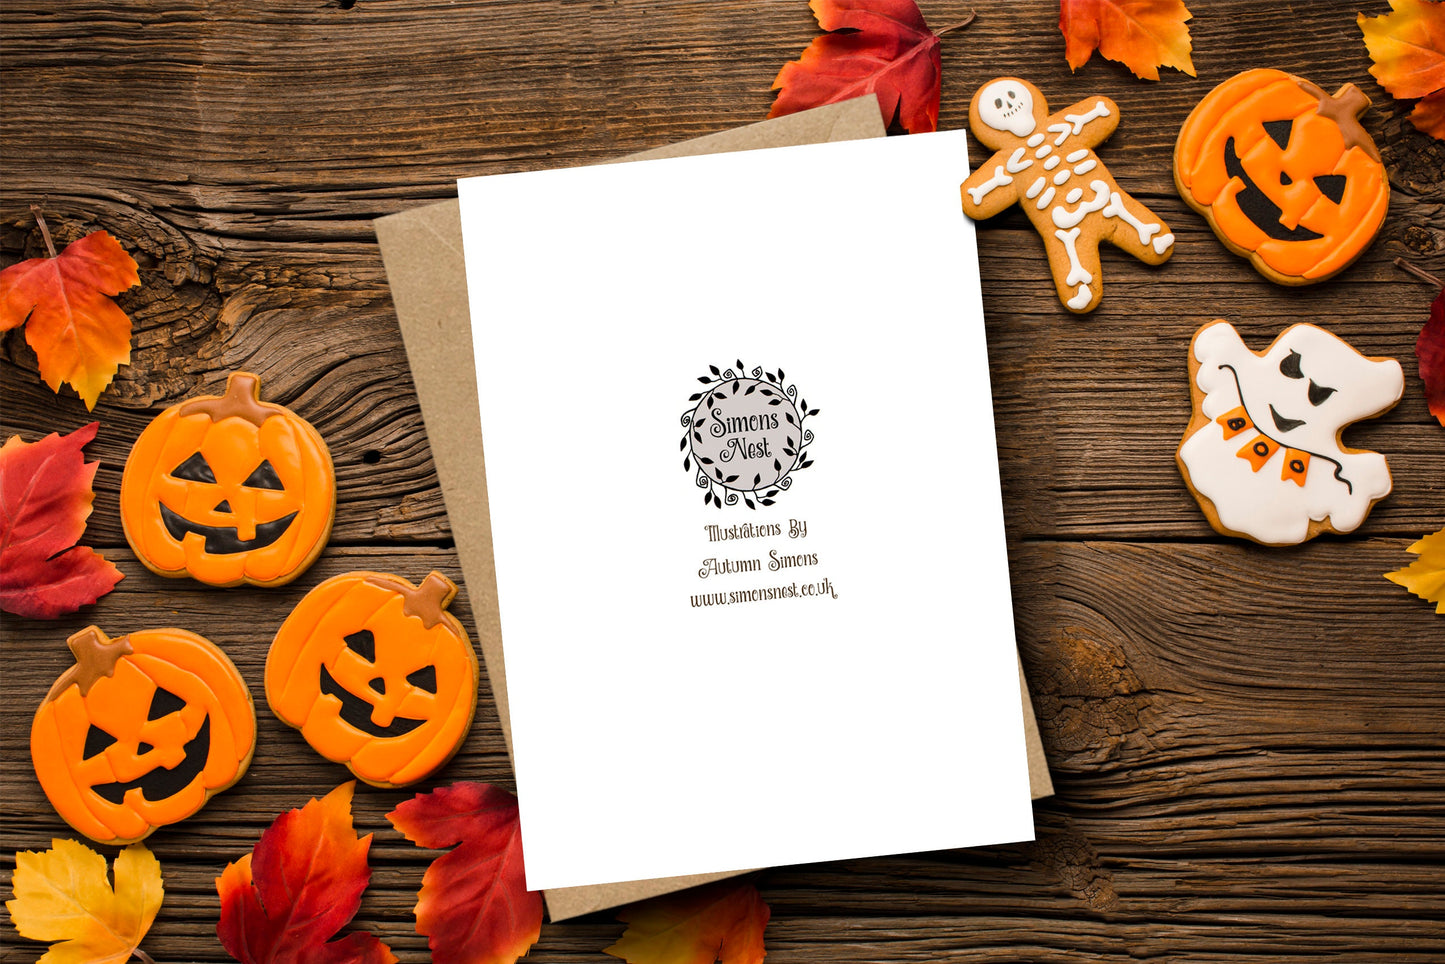 Soul Cakes Greetings Card & Envelope - Halloween All Hallows Eve Samhain Card - Spooky Baking Card - Ghost Bat Cobweb Trick Or Treat Gift